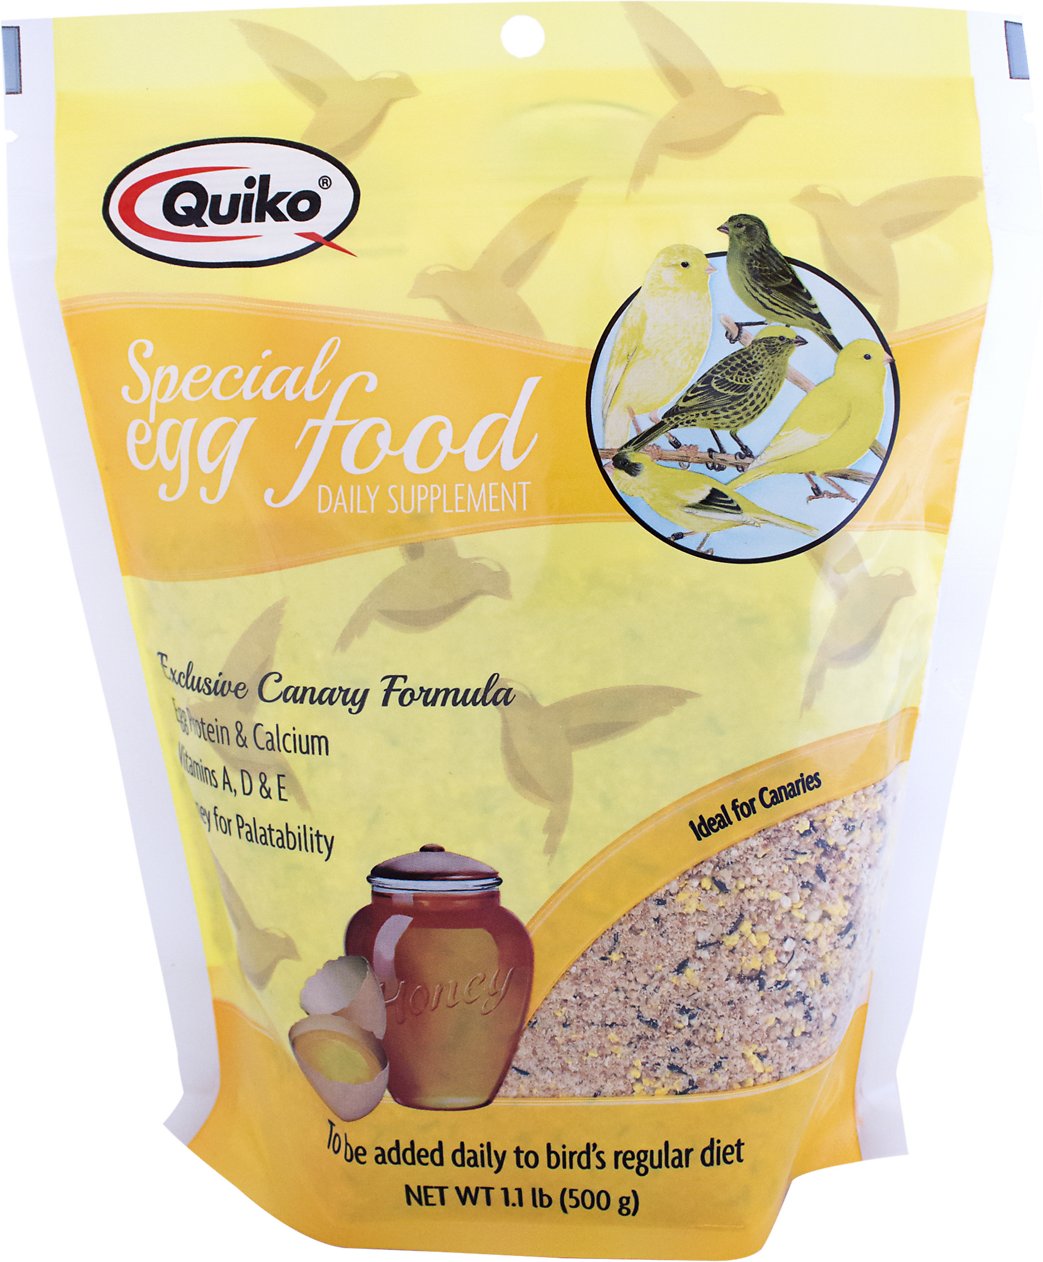 Quiko- Special Egg Food